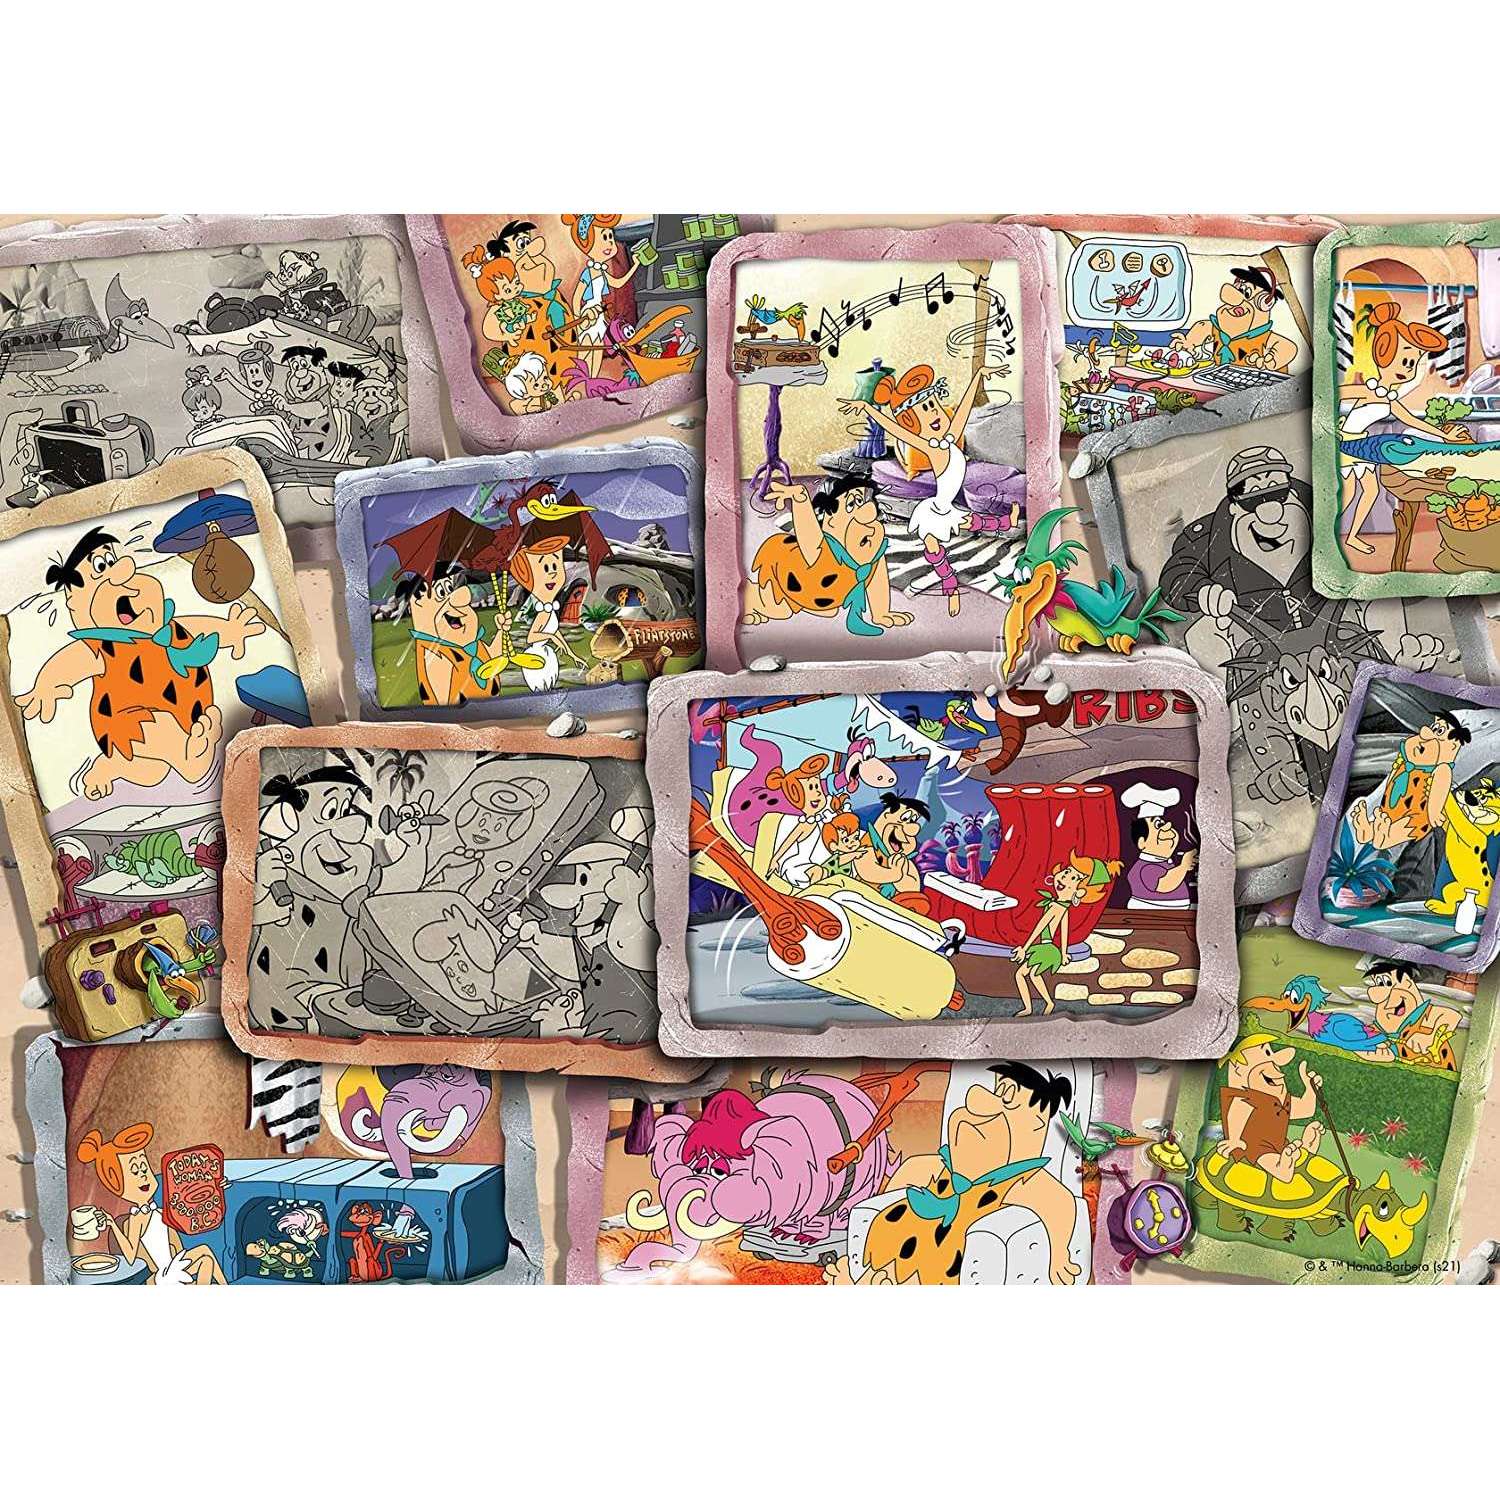 Toys N Tuck:Ravensburger 1000pc Puzzle The Flintstones,The Flintstones